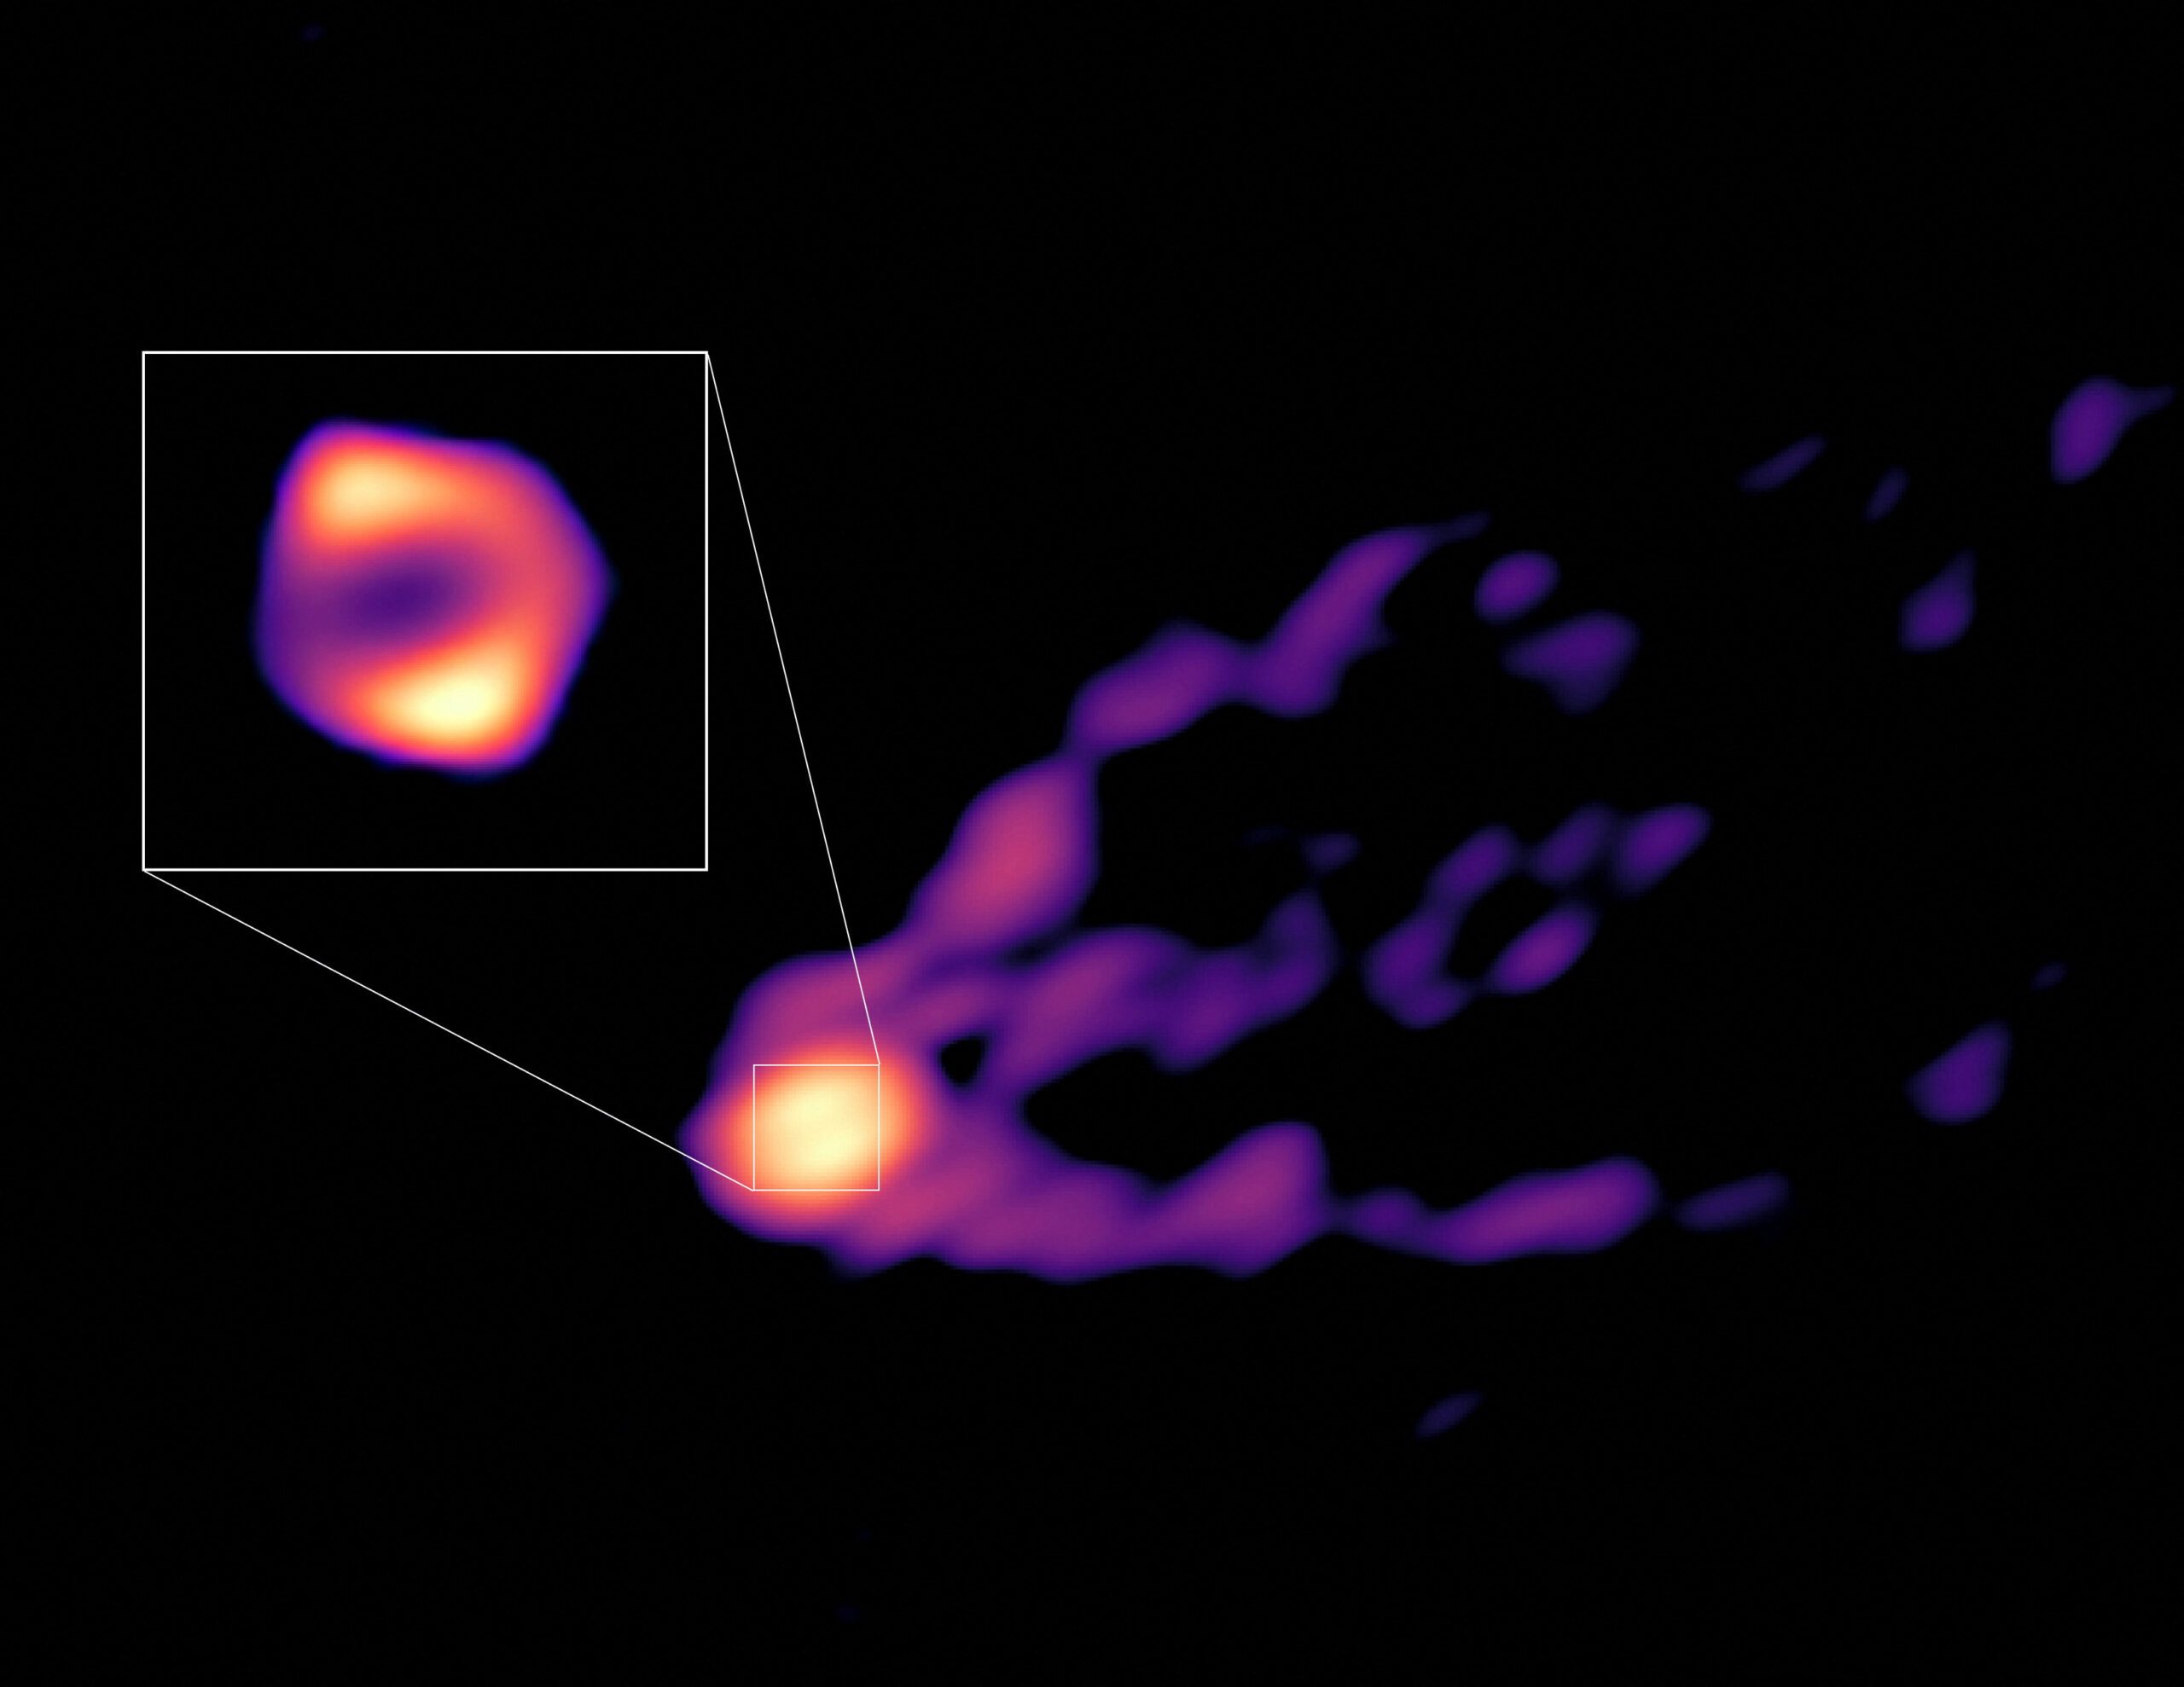 New image reveals violent events near a supermassive black hole